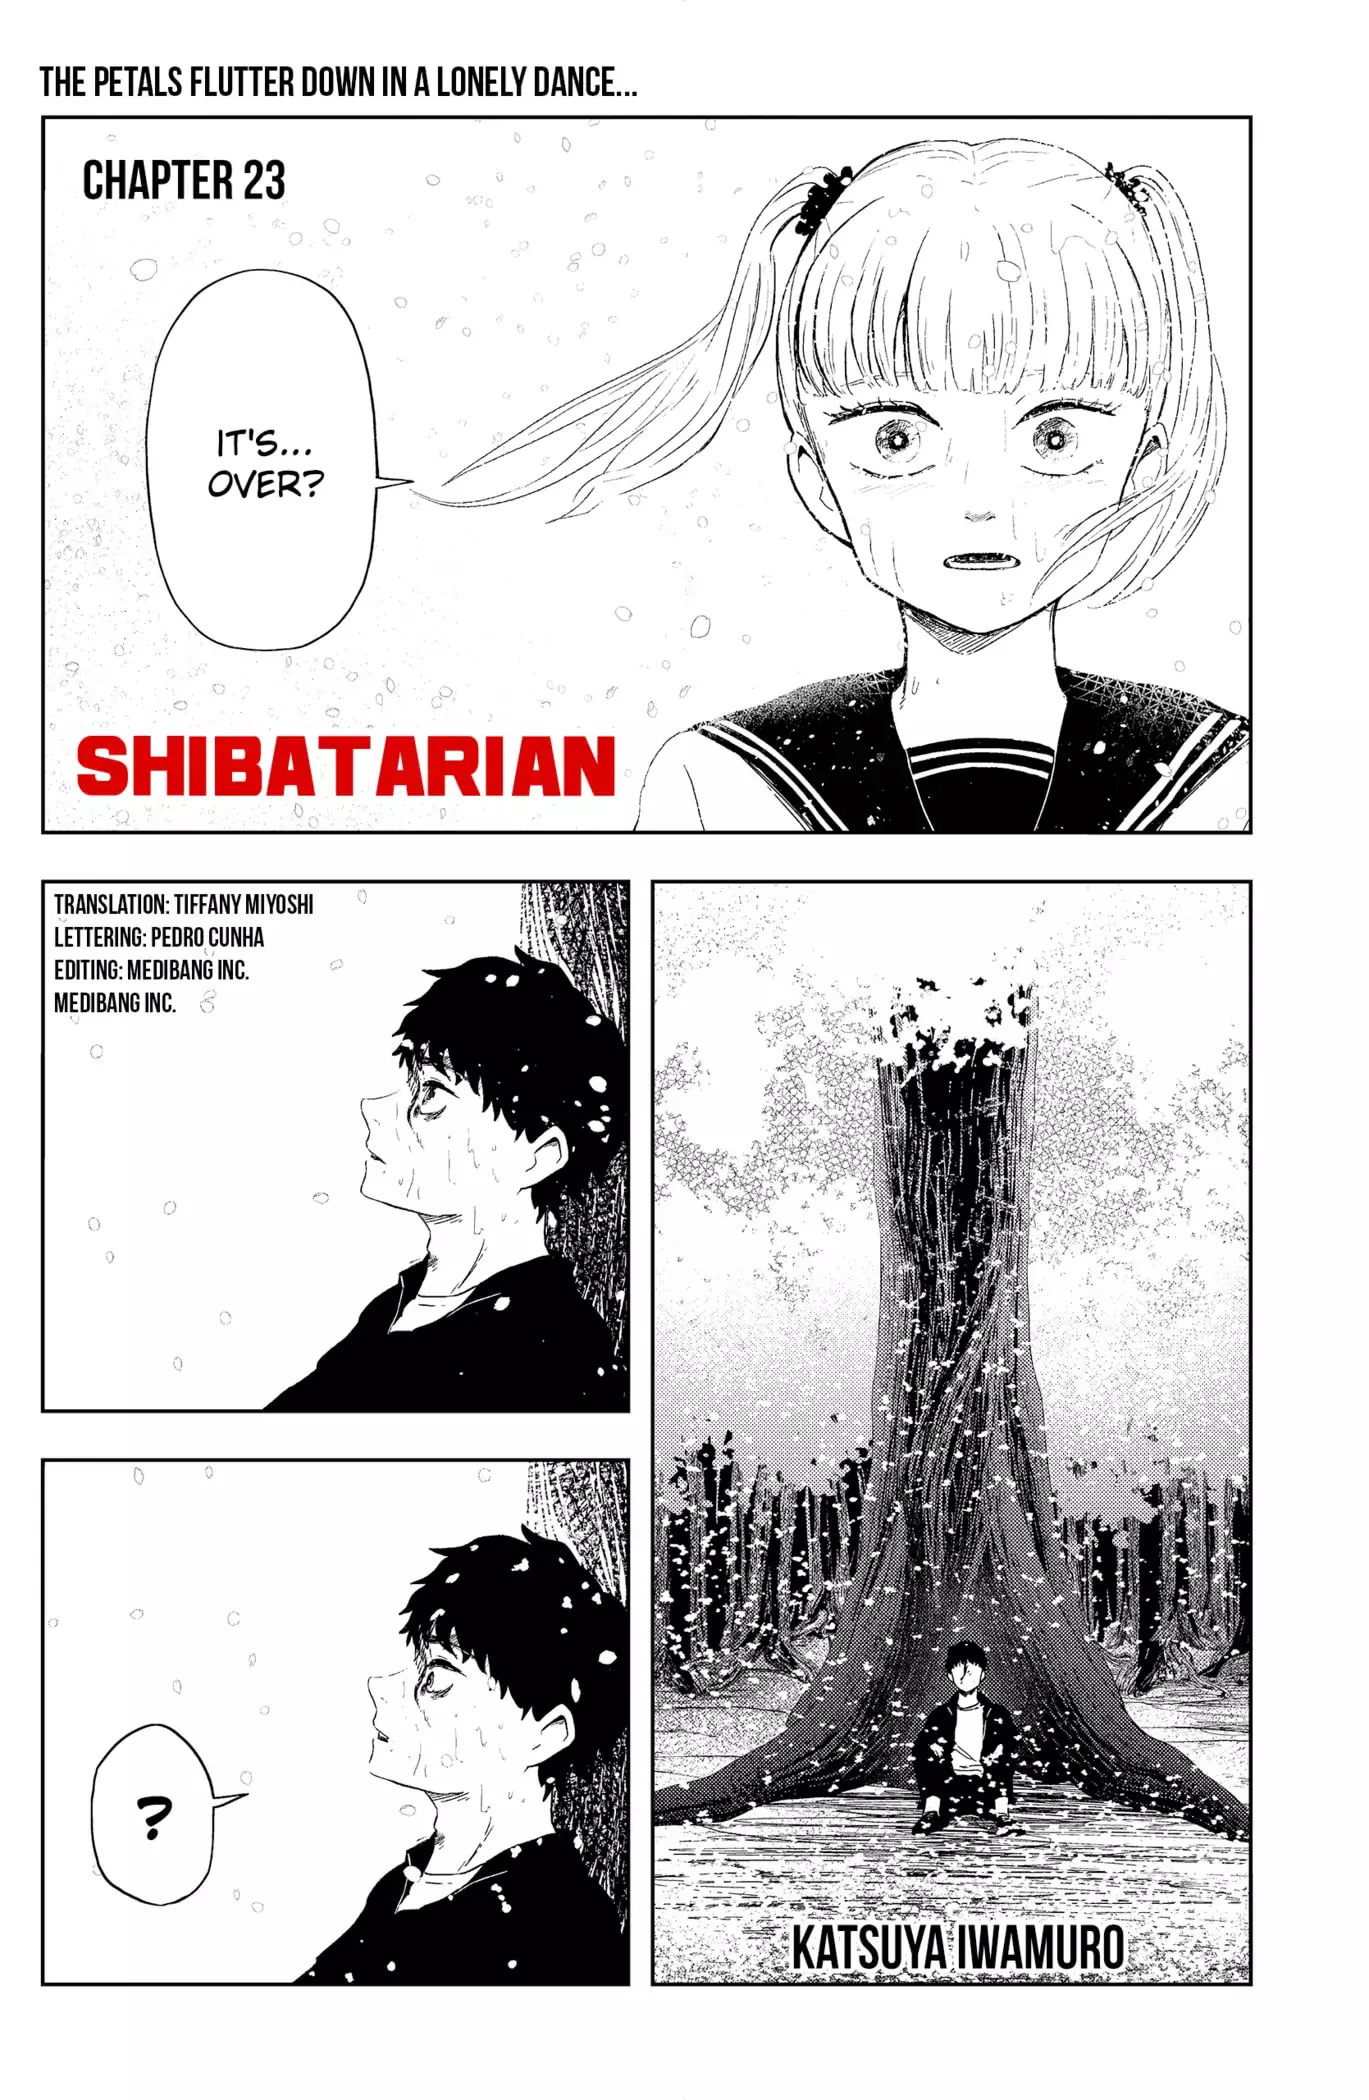 Shibatarian - 23 page 2-4209bbc6